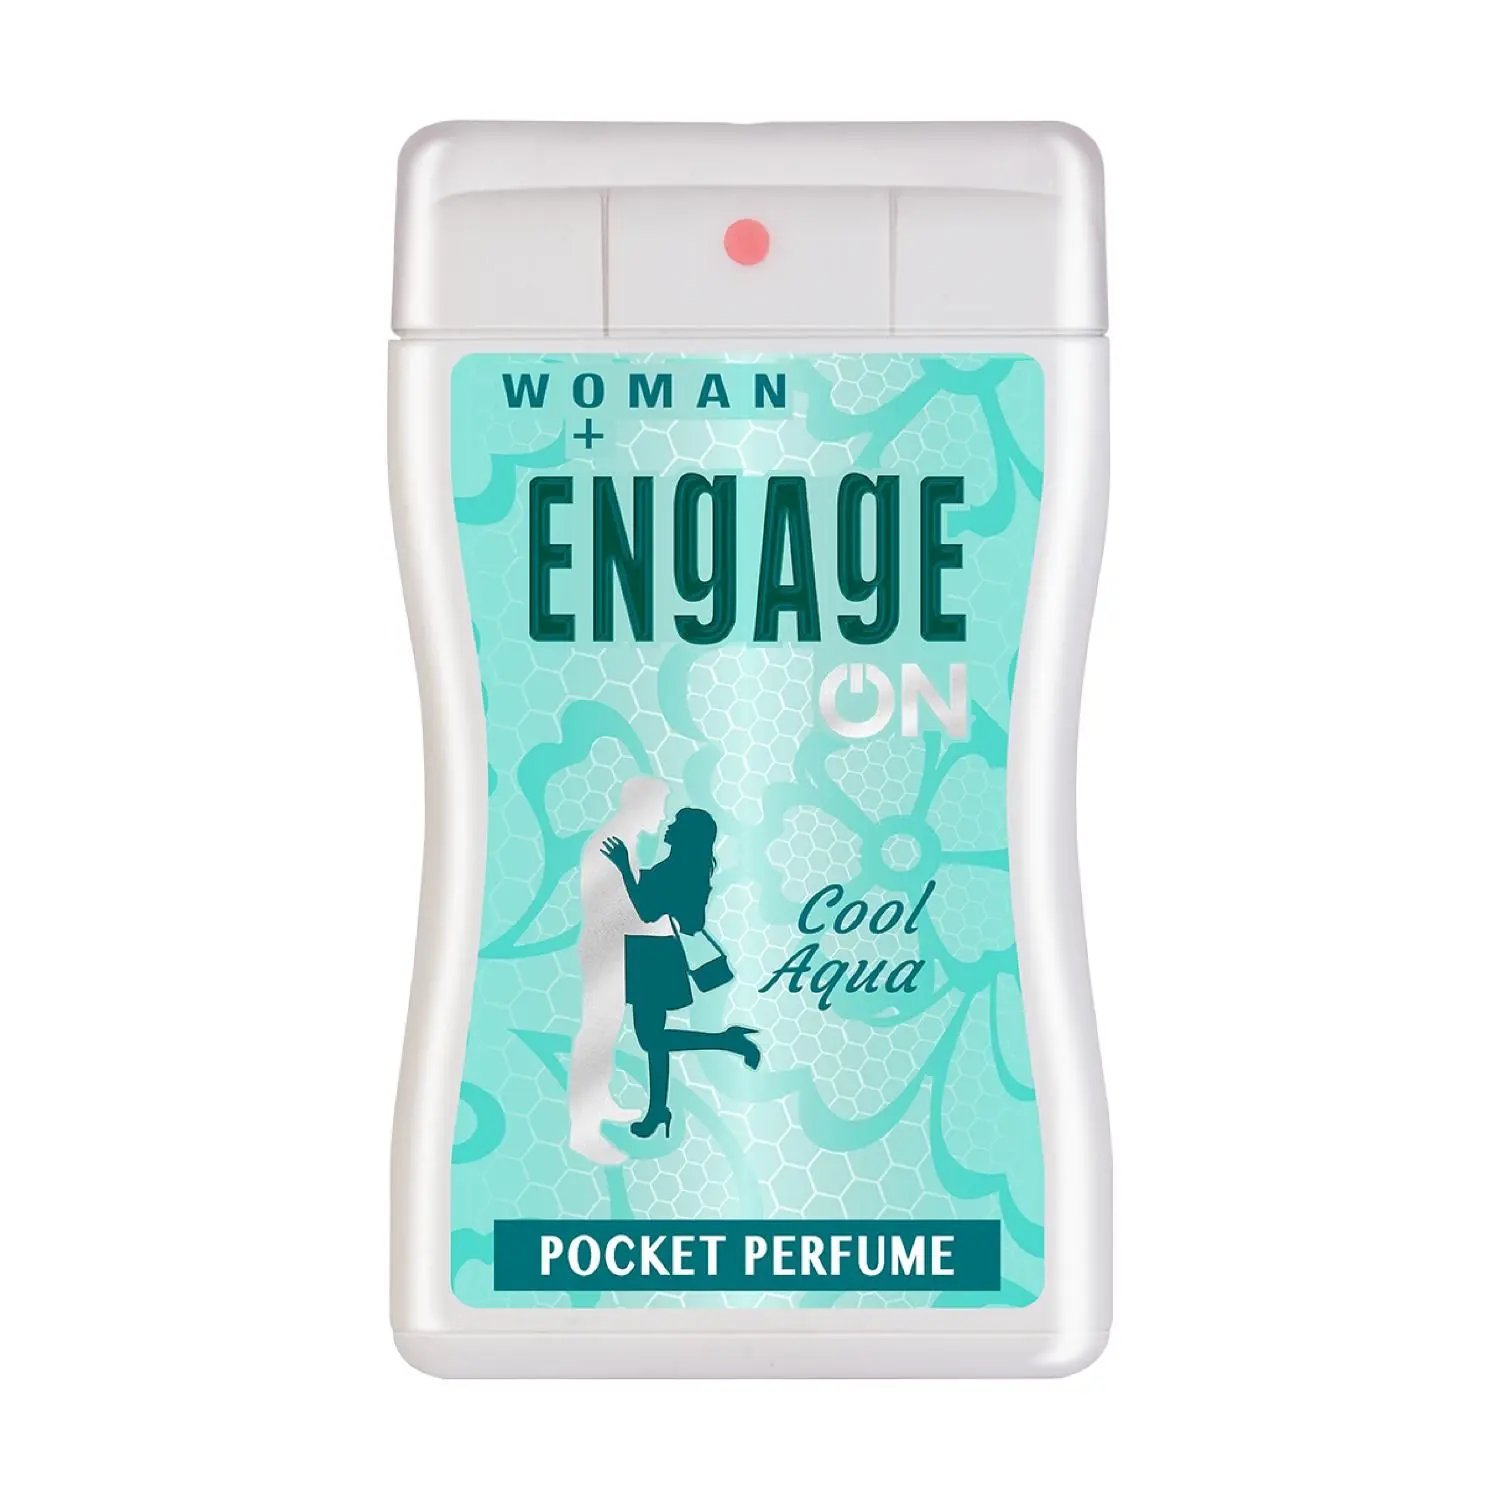 Engage ON Cool Aqua Pocket Perfume for Women, 17 ml